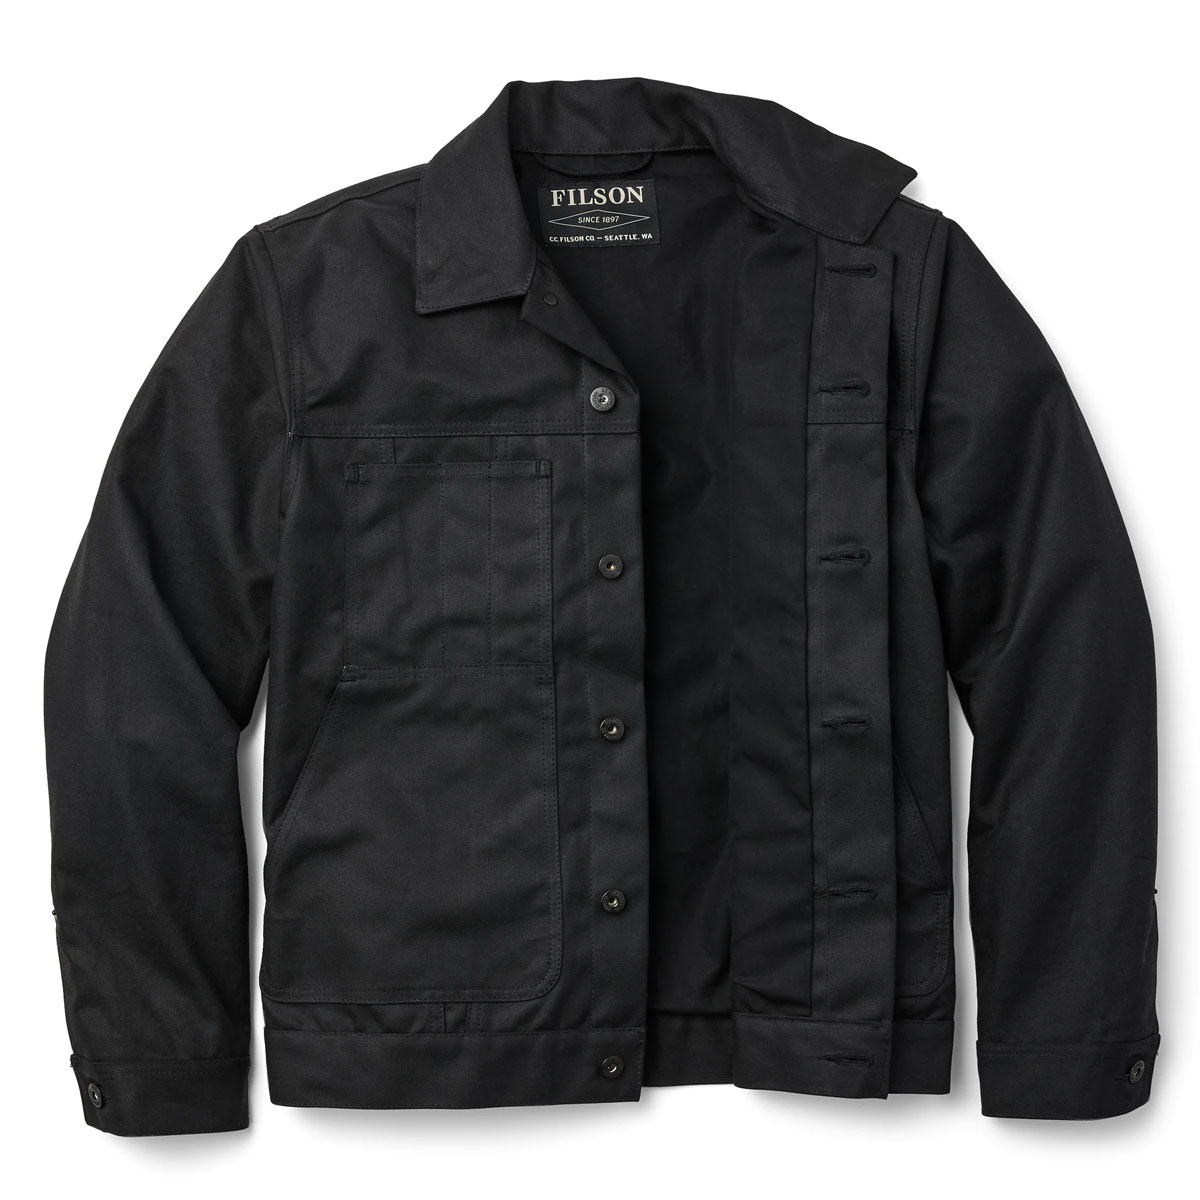 Negrita lado Multa Filson Tin Cloth Short Lined Cruiser Jacket Black, tough work jacket